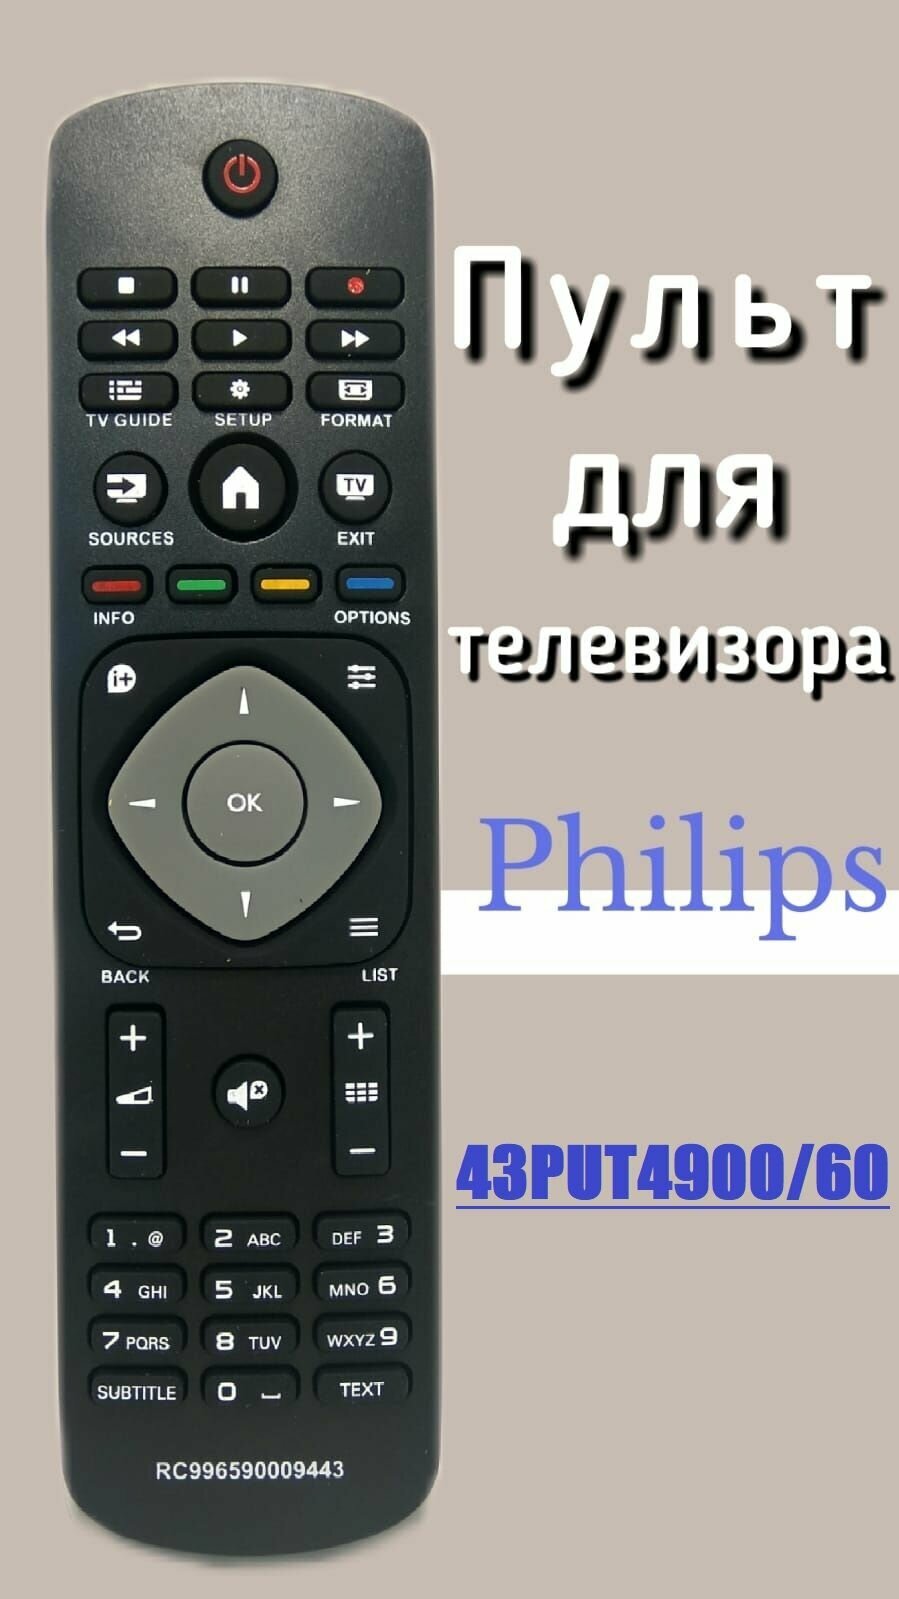 Пульт для телевизора PHILIPS 43PUT4900/60